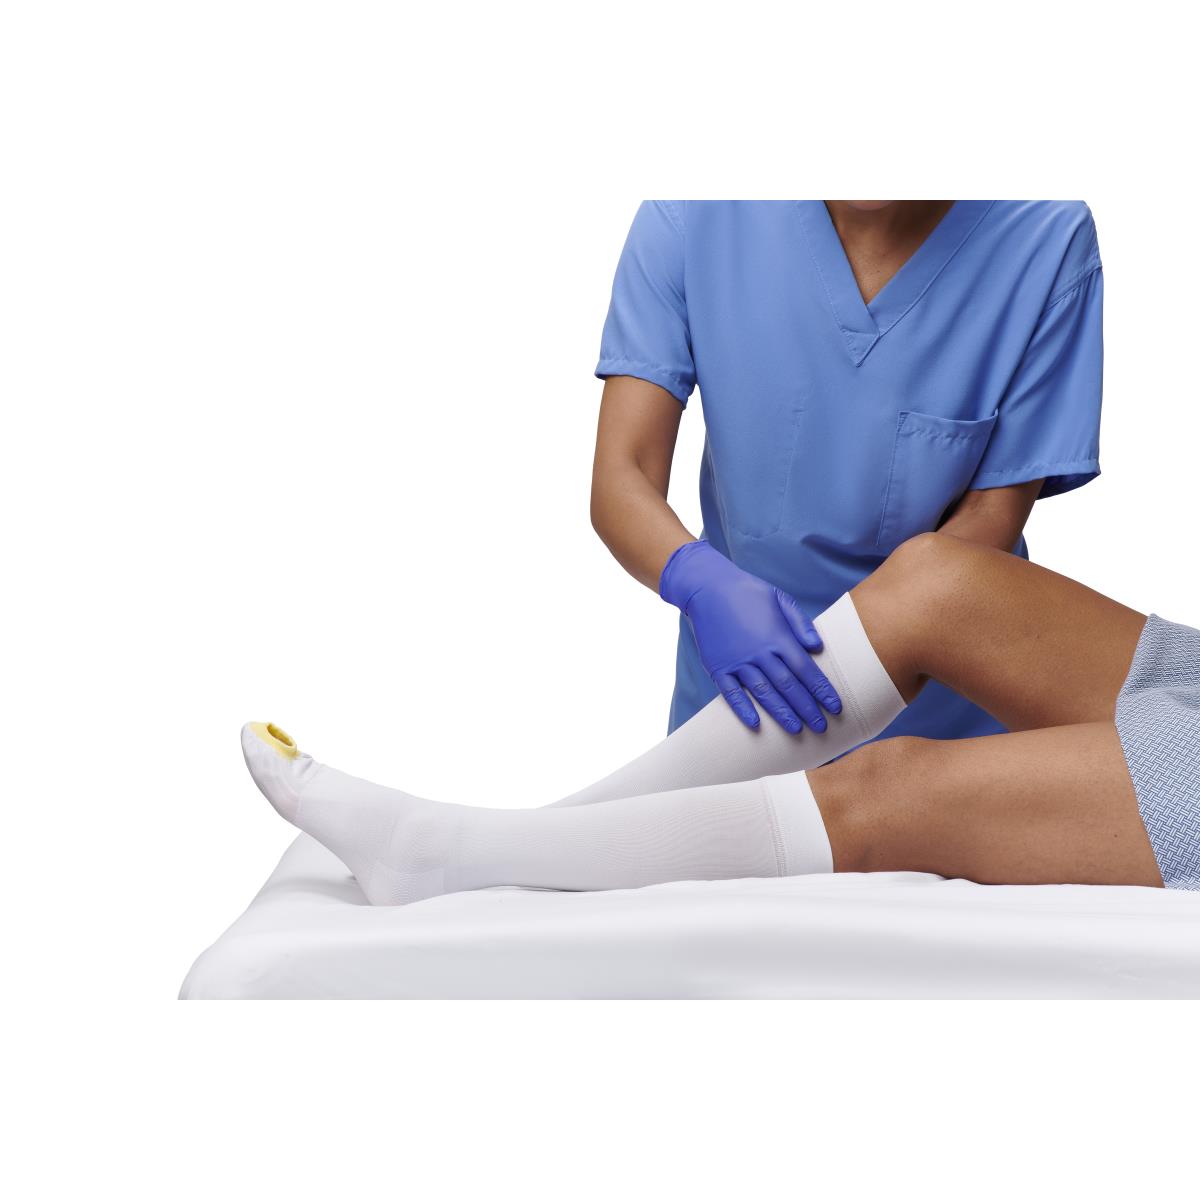 T.E.D. Knee Length Anti-Embolism Stockings